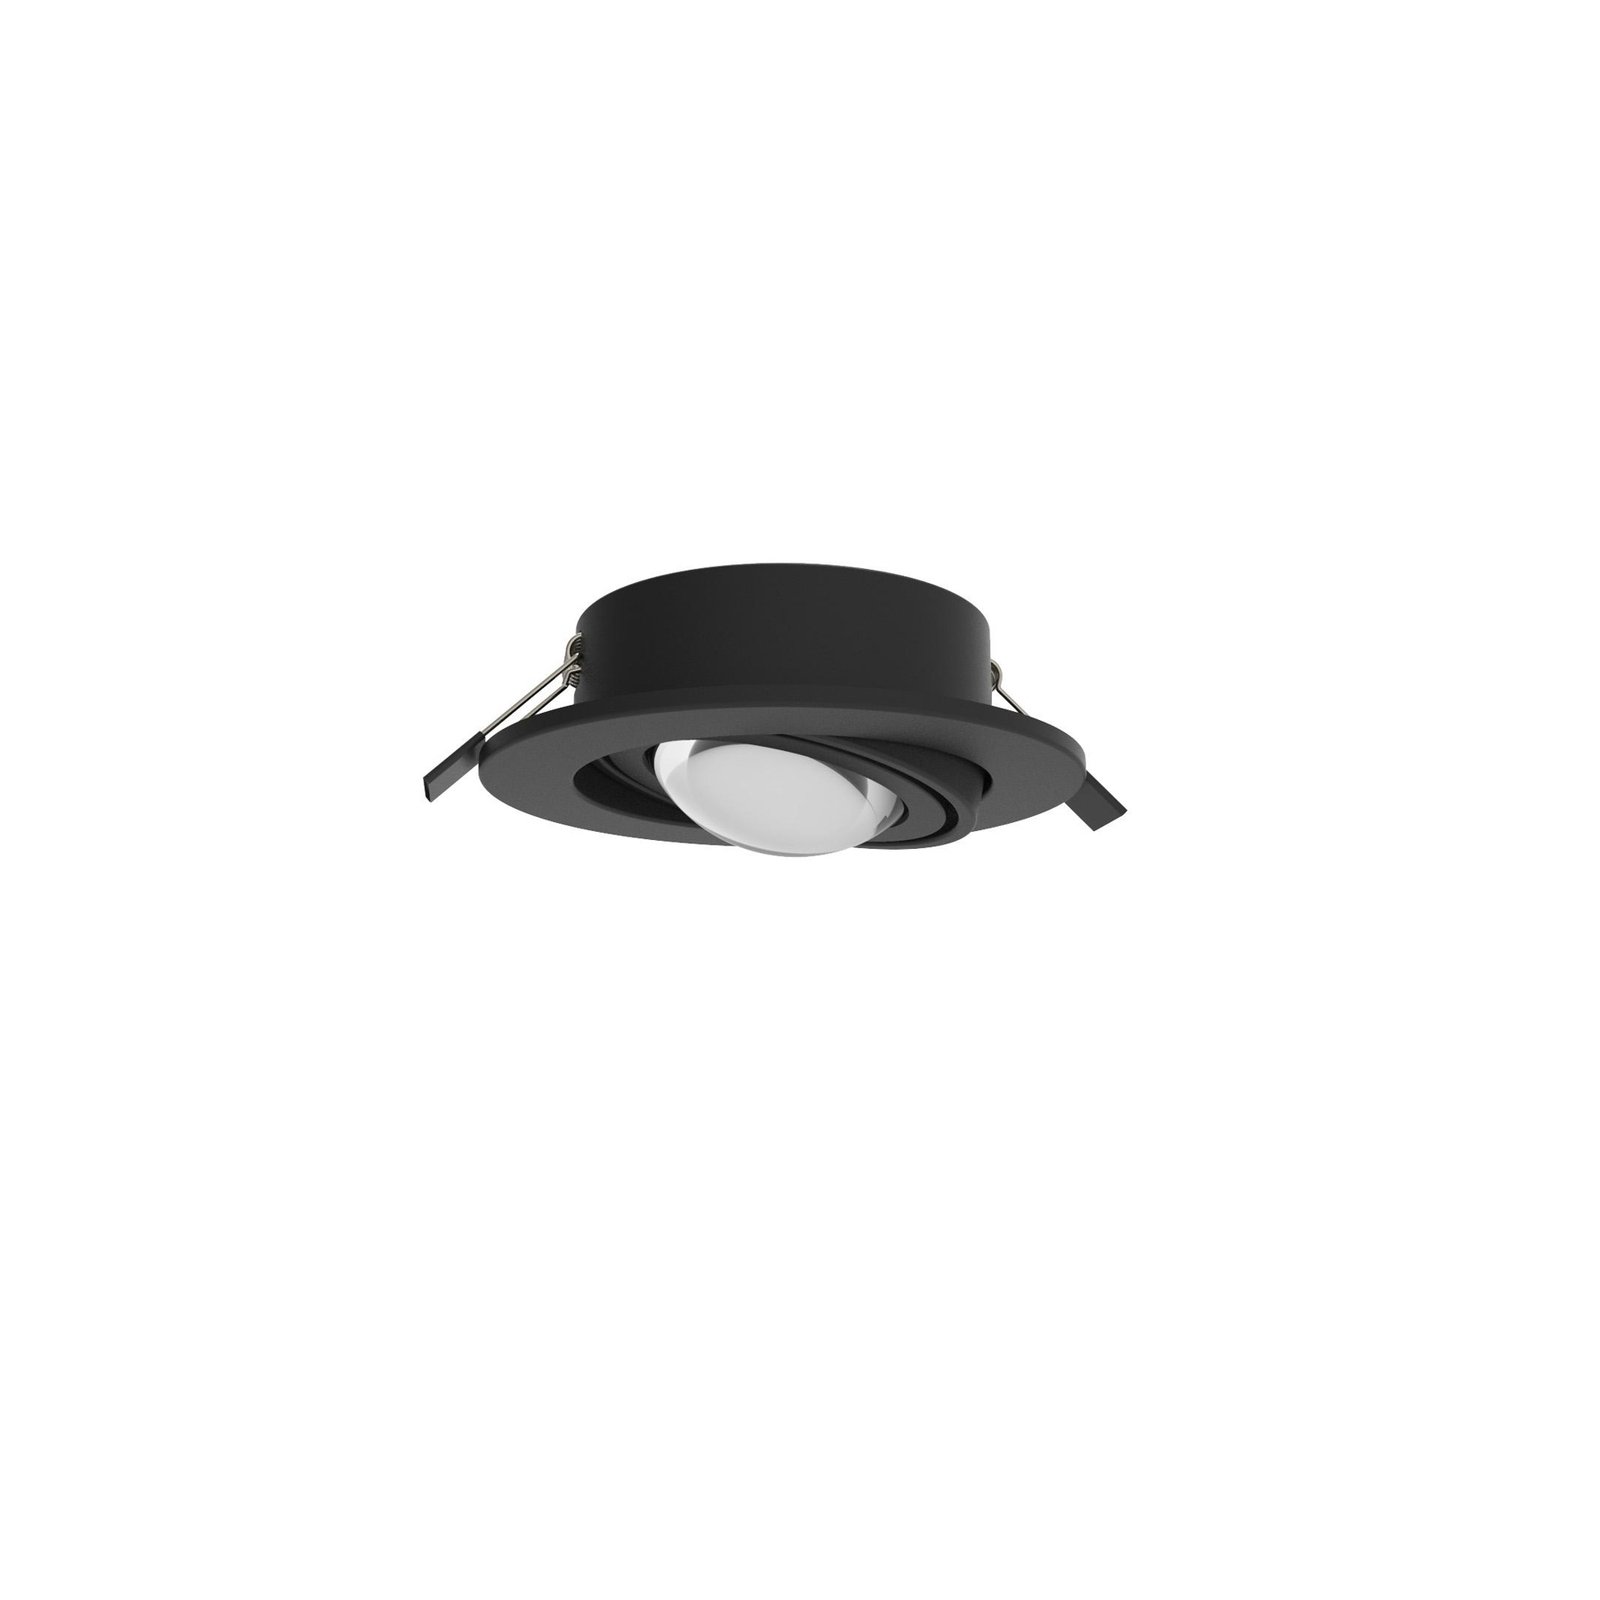 MEGATRON LED reflektor za vgradnjo Planex Powerlens, 4,8 W, črna